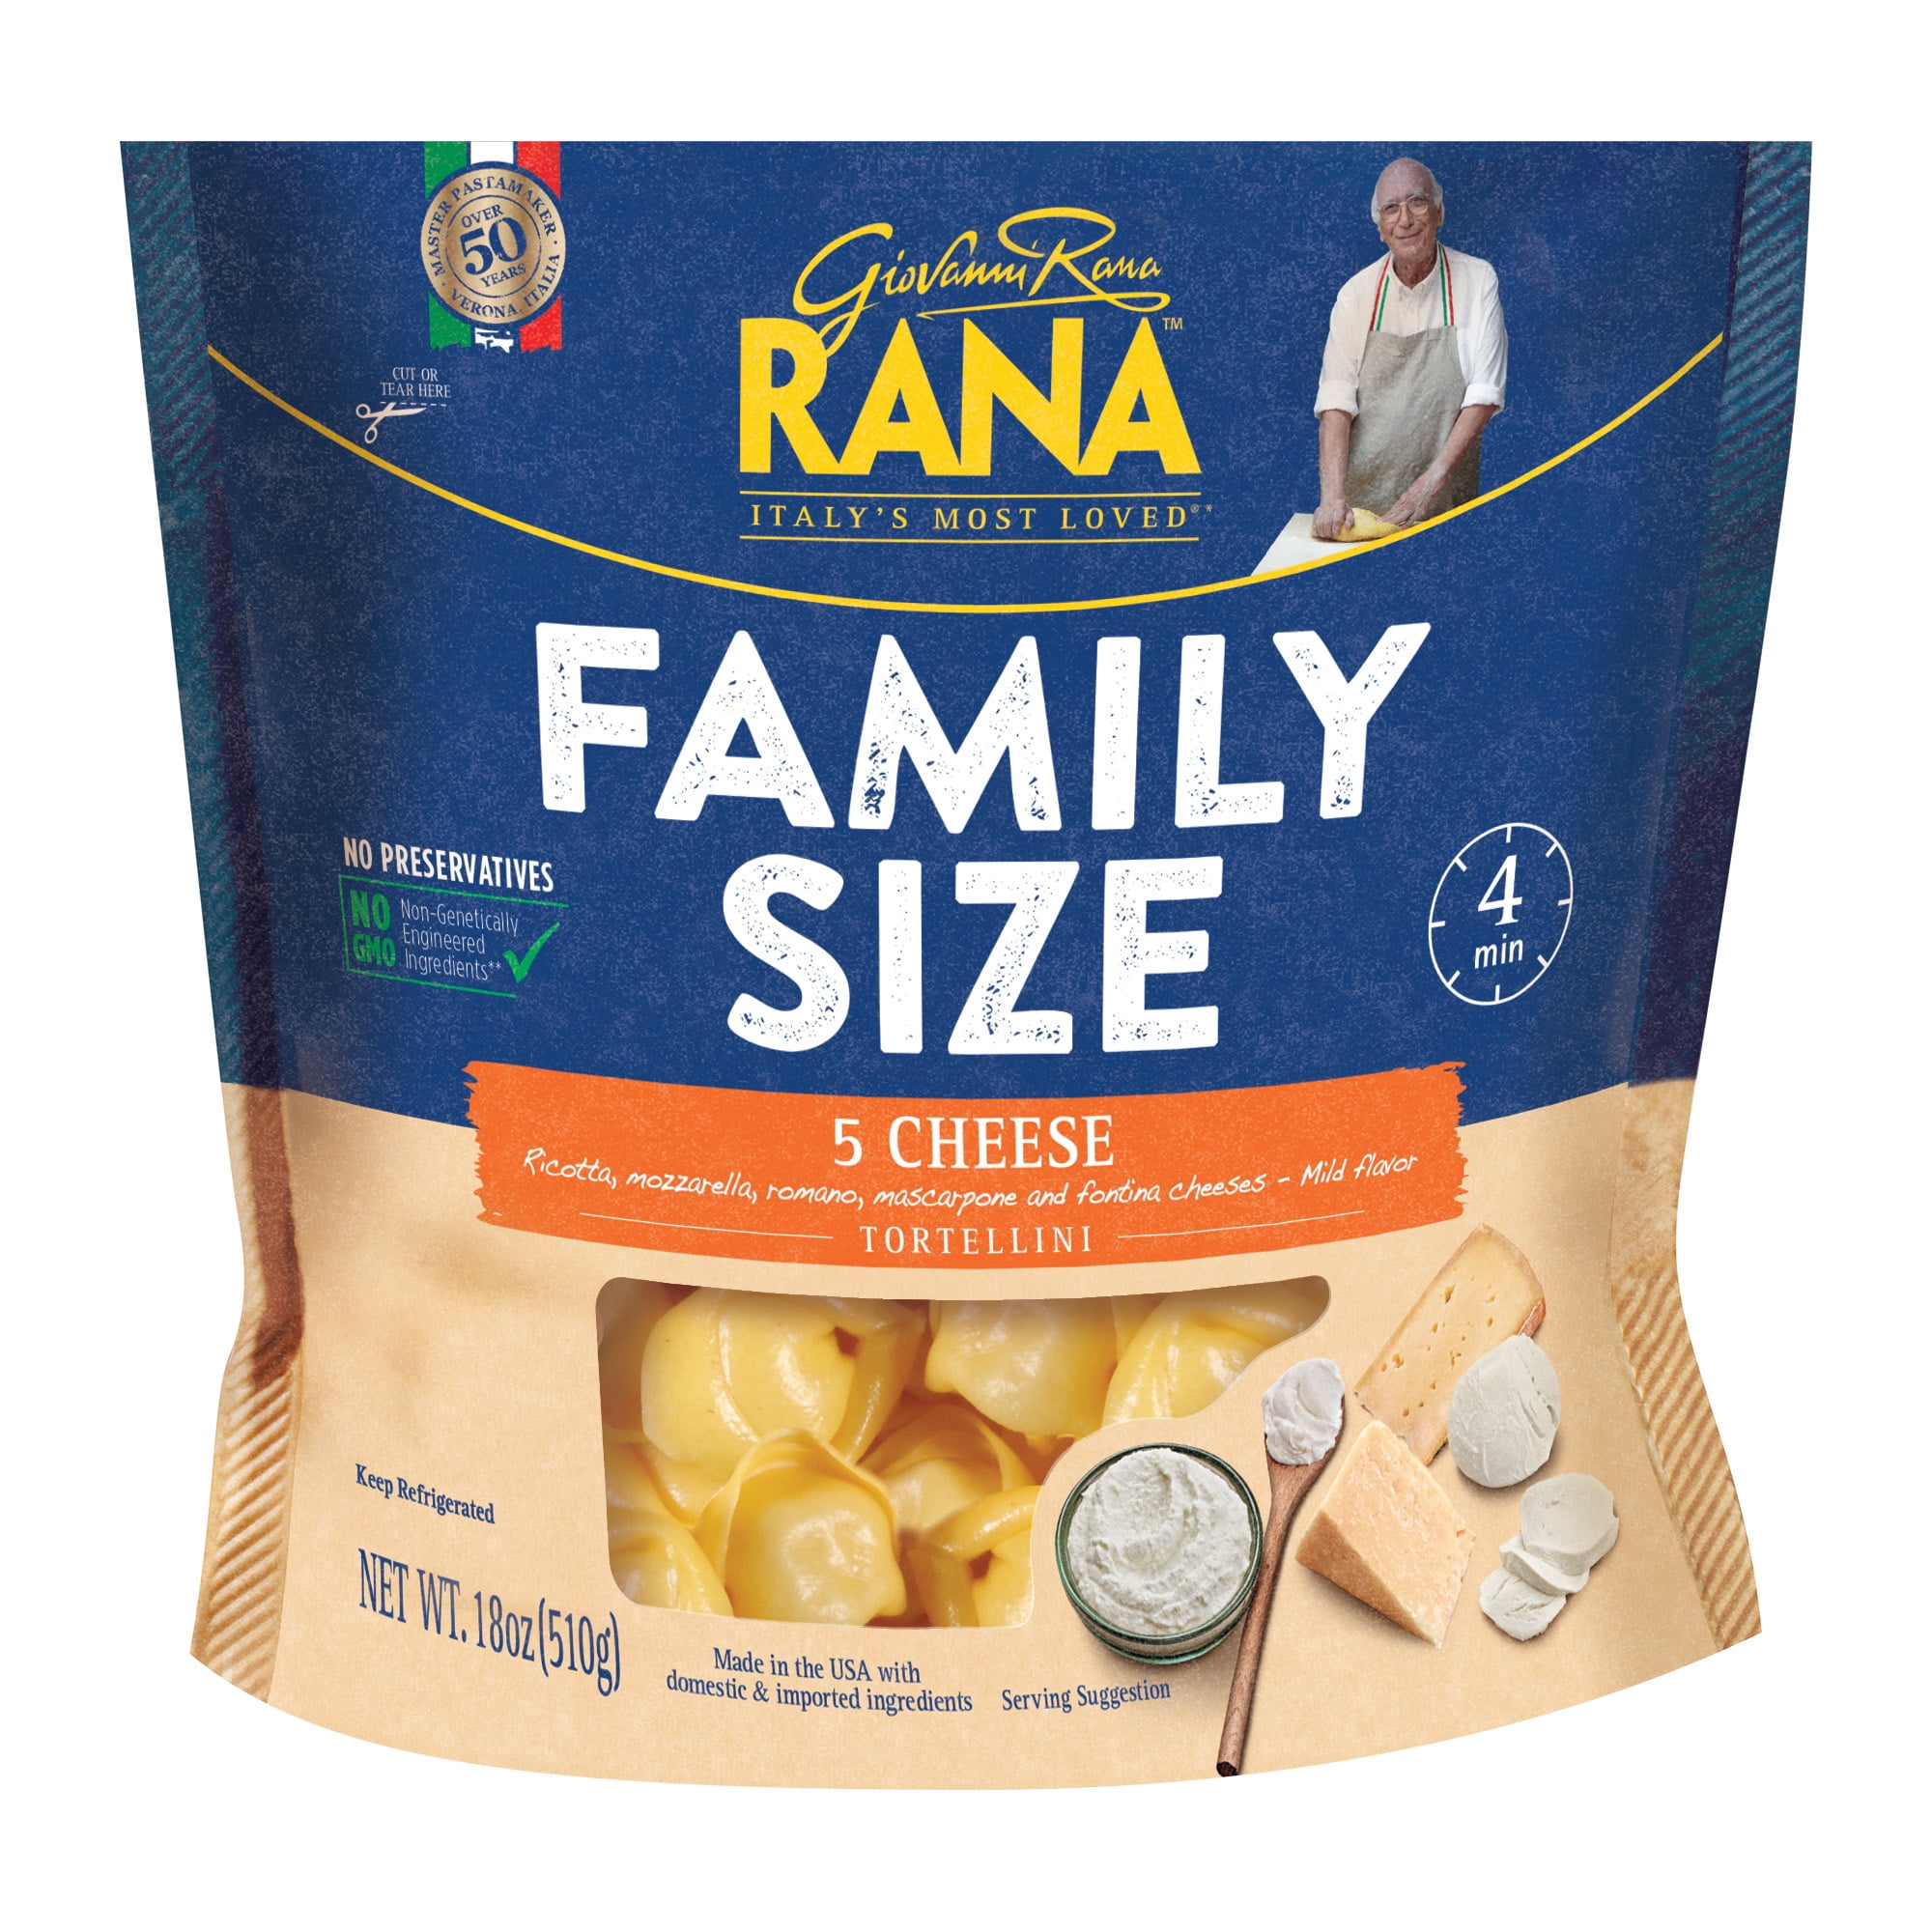 Giovanni Rana Homestyle Tortellini 5 Cheese Premium Flat Cut Pasta Bag (Family Size, 18oz)